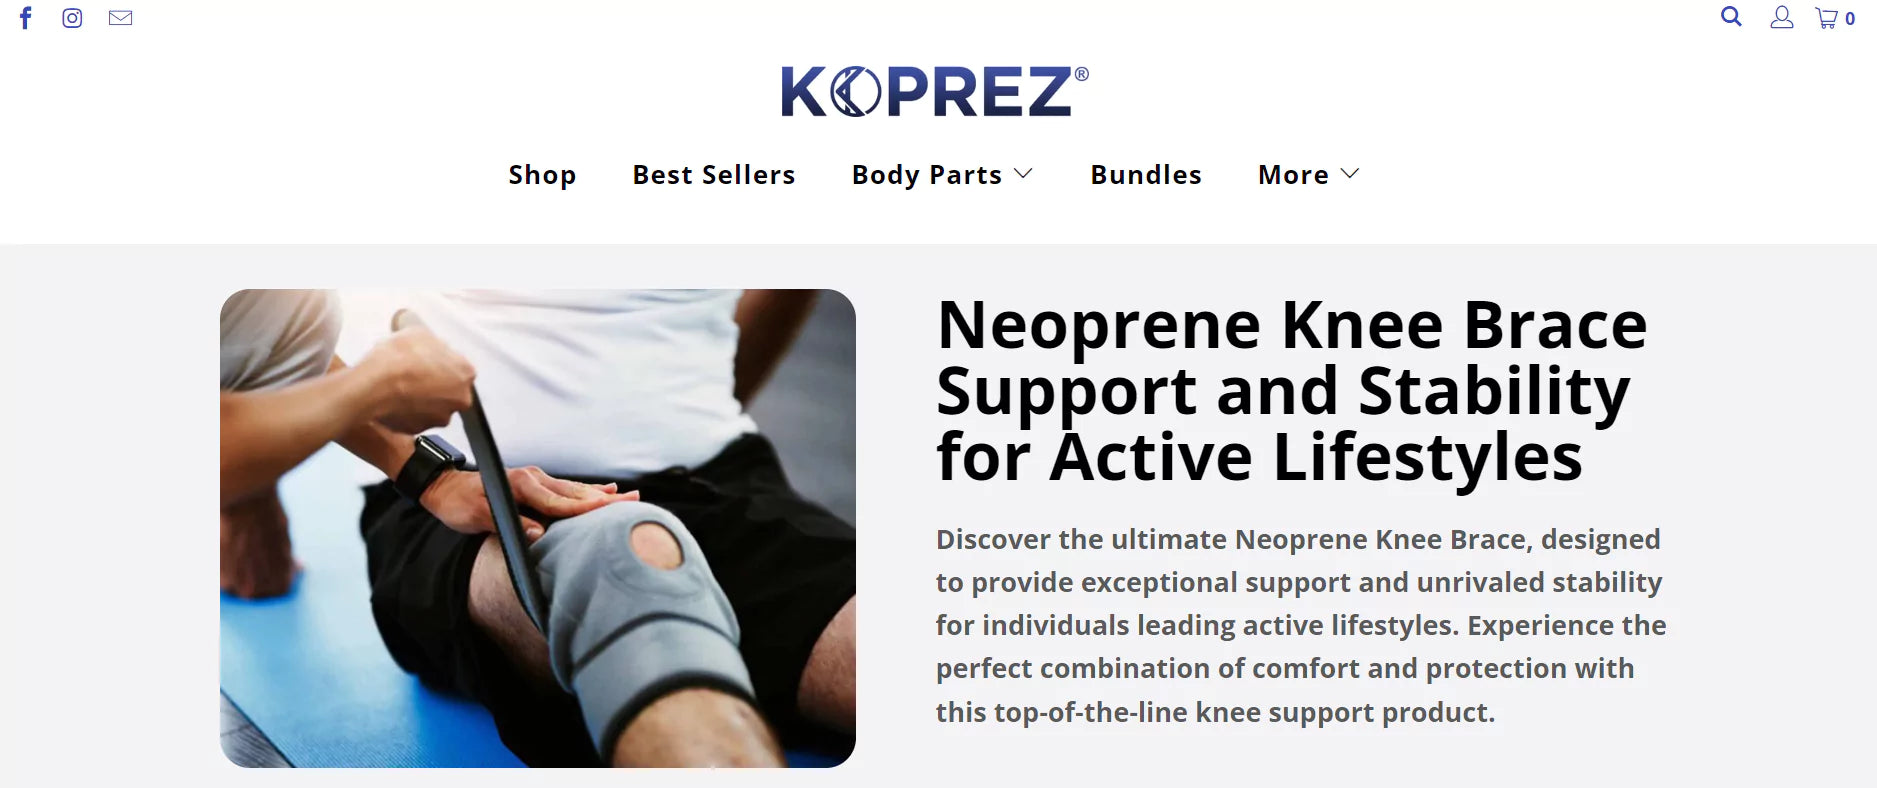 A Koprez blog post about the neoprene knee brace